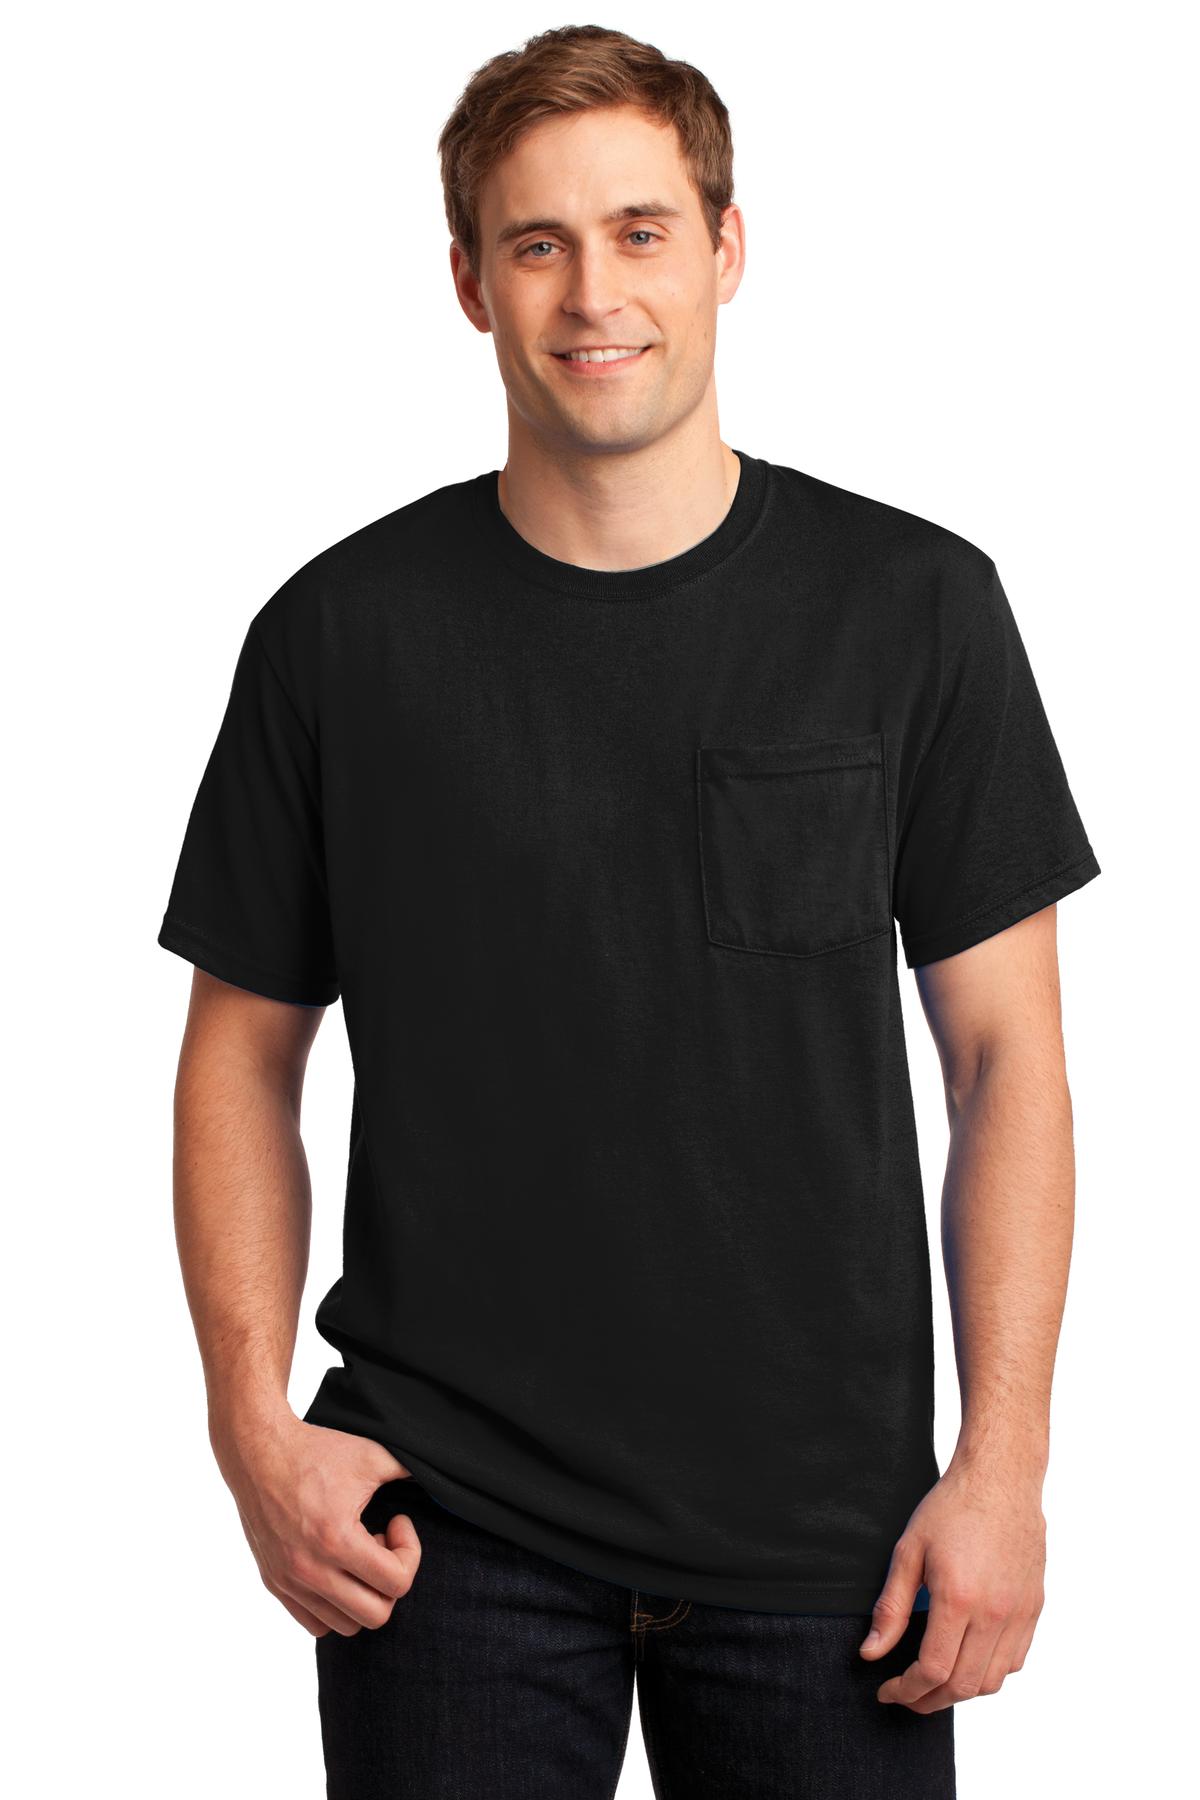 JERZEES® - Dri-Power® 50/50 Cotton/Poly Pocket T-Shirt. 29MP [Black] - DFW Impression